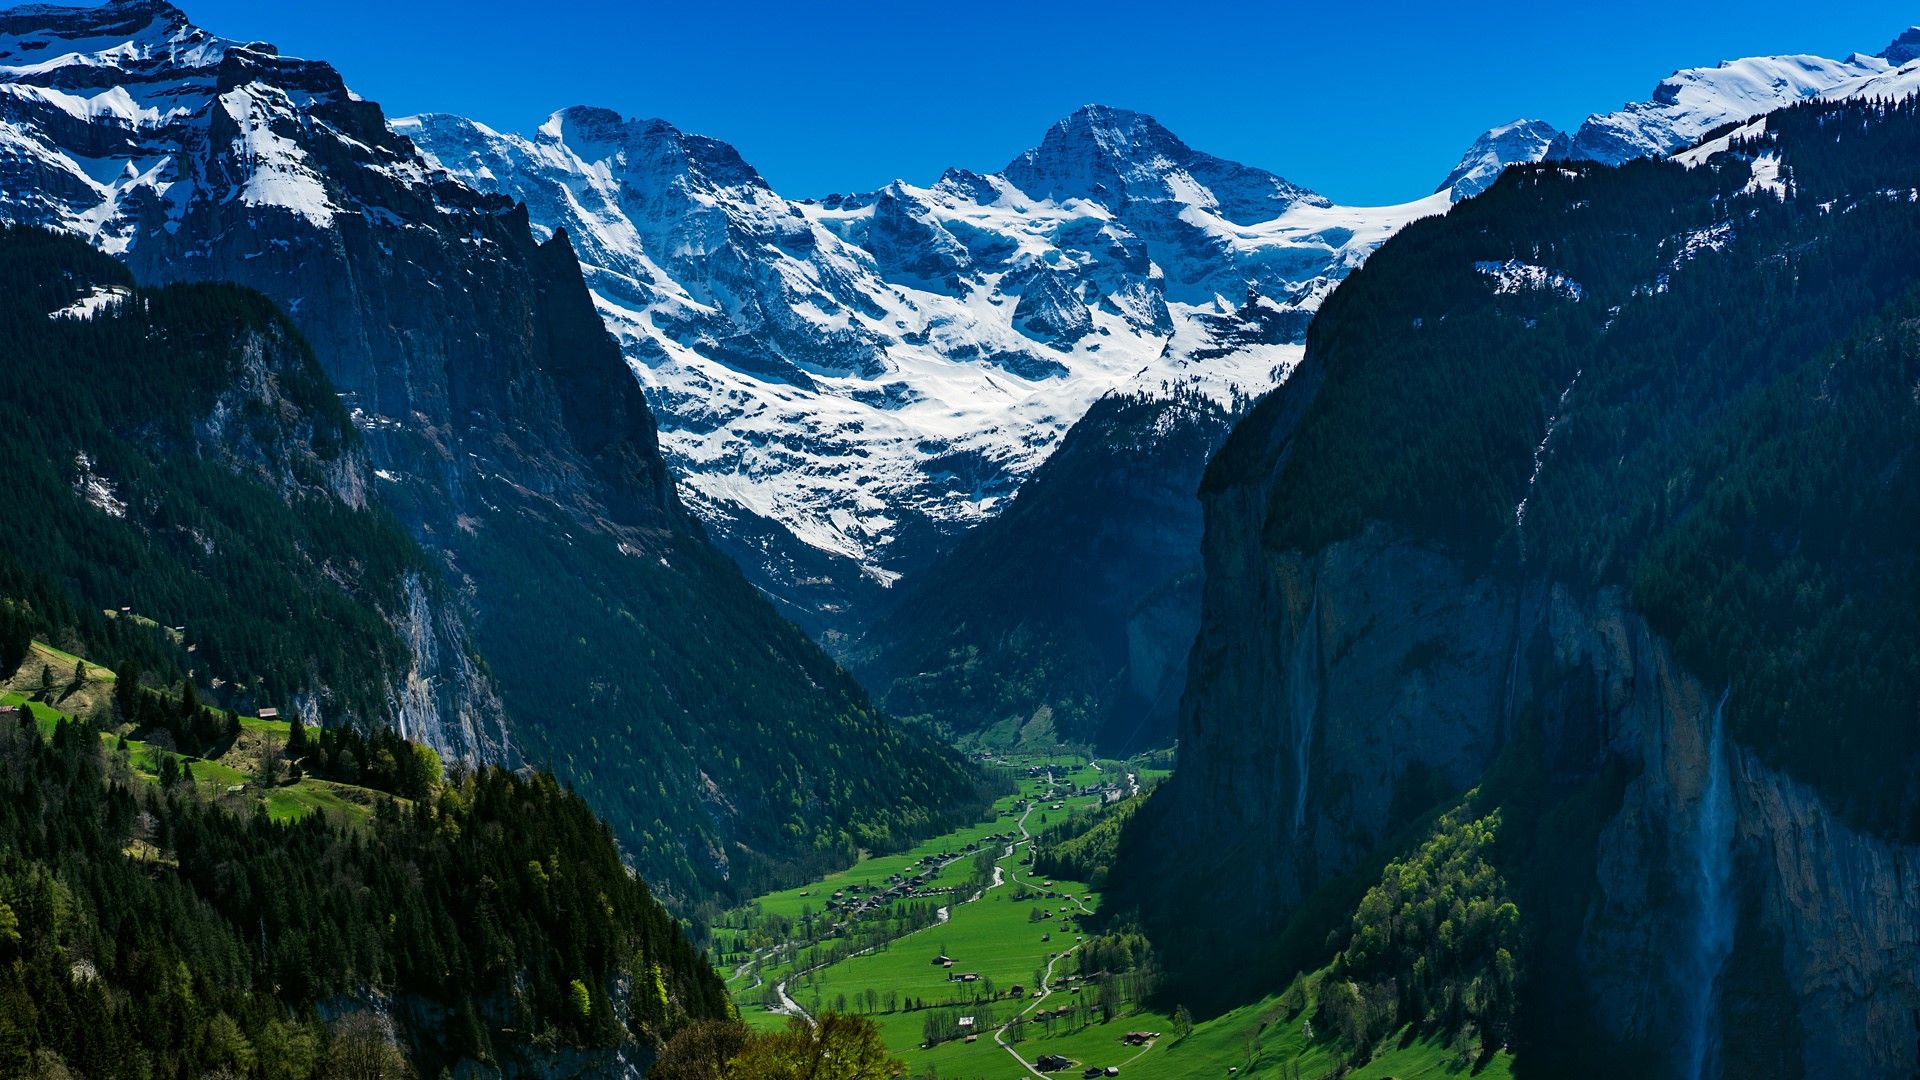 Mountain village Wengen in Switzerland Alps, Lauterbrunnen. Windows 10 Spotlight Image